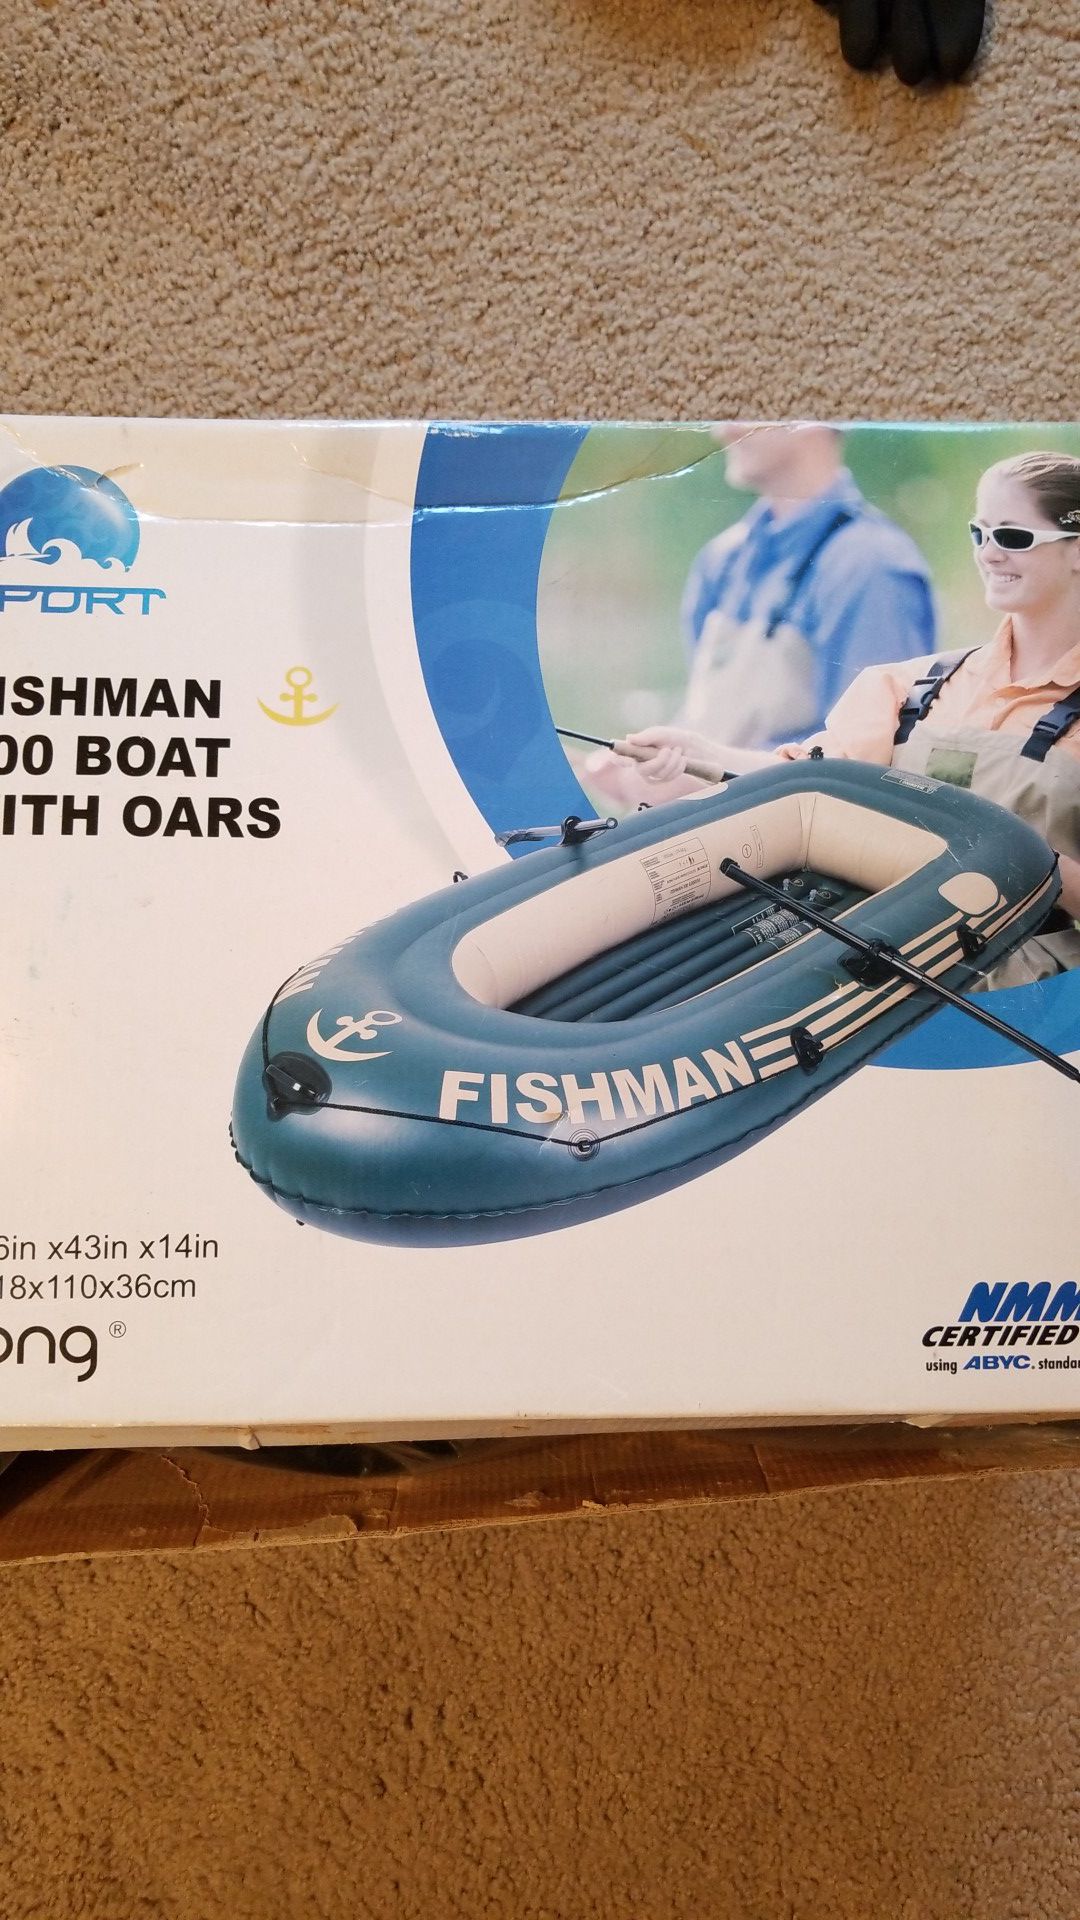 Fishman inflatable fishing boat